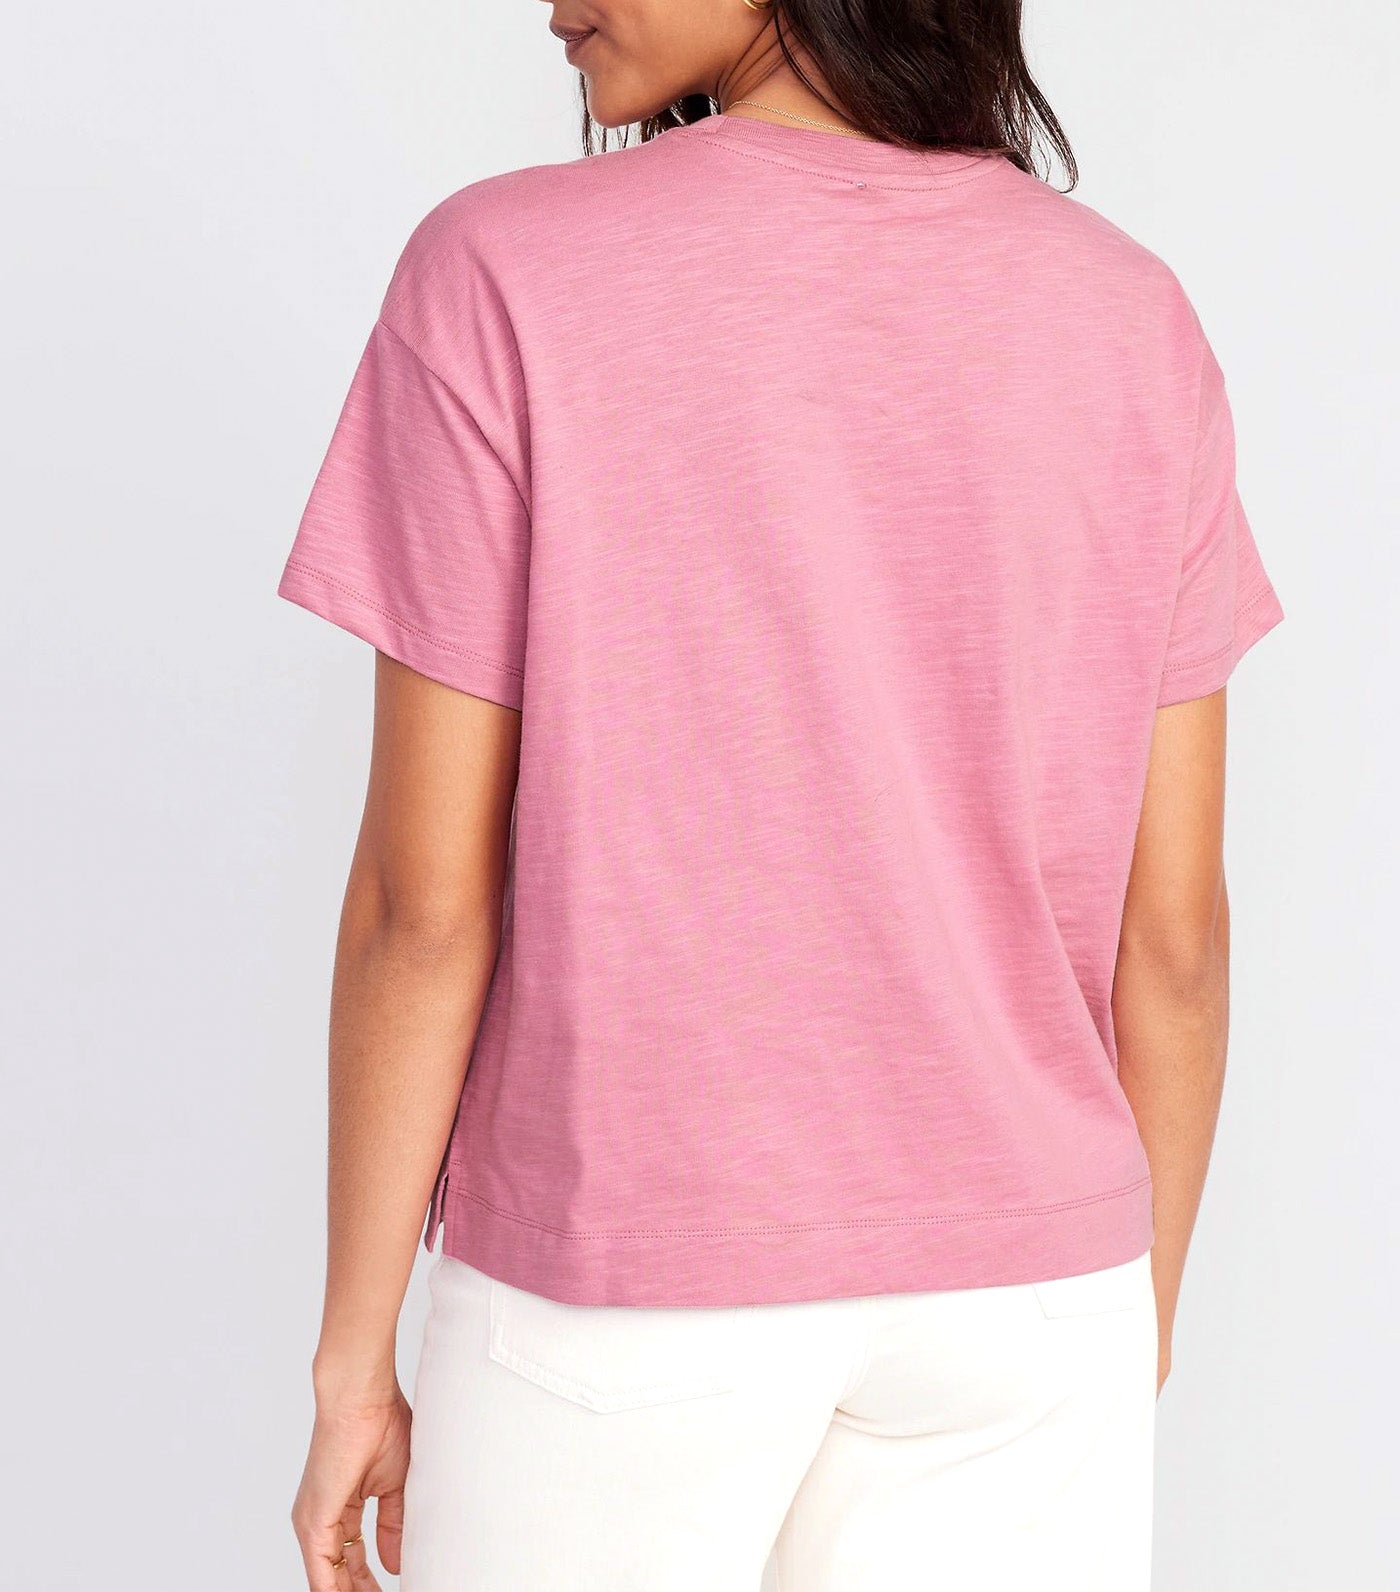 Vintage Slub-Knit T-Shirt for Women Rose Cloud